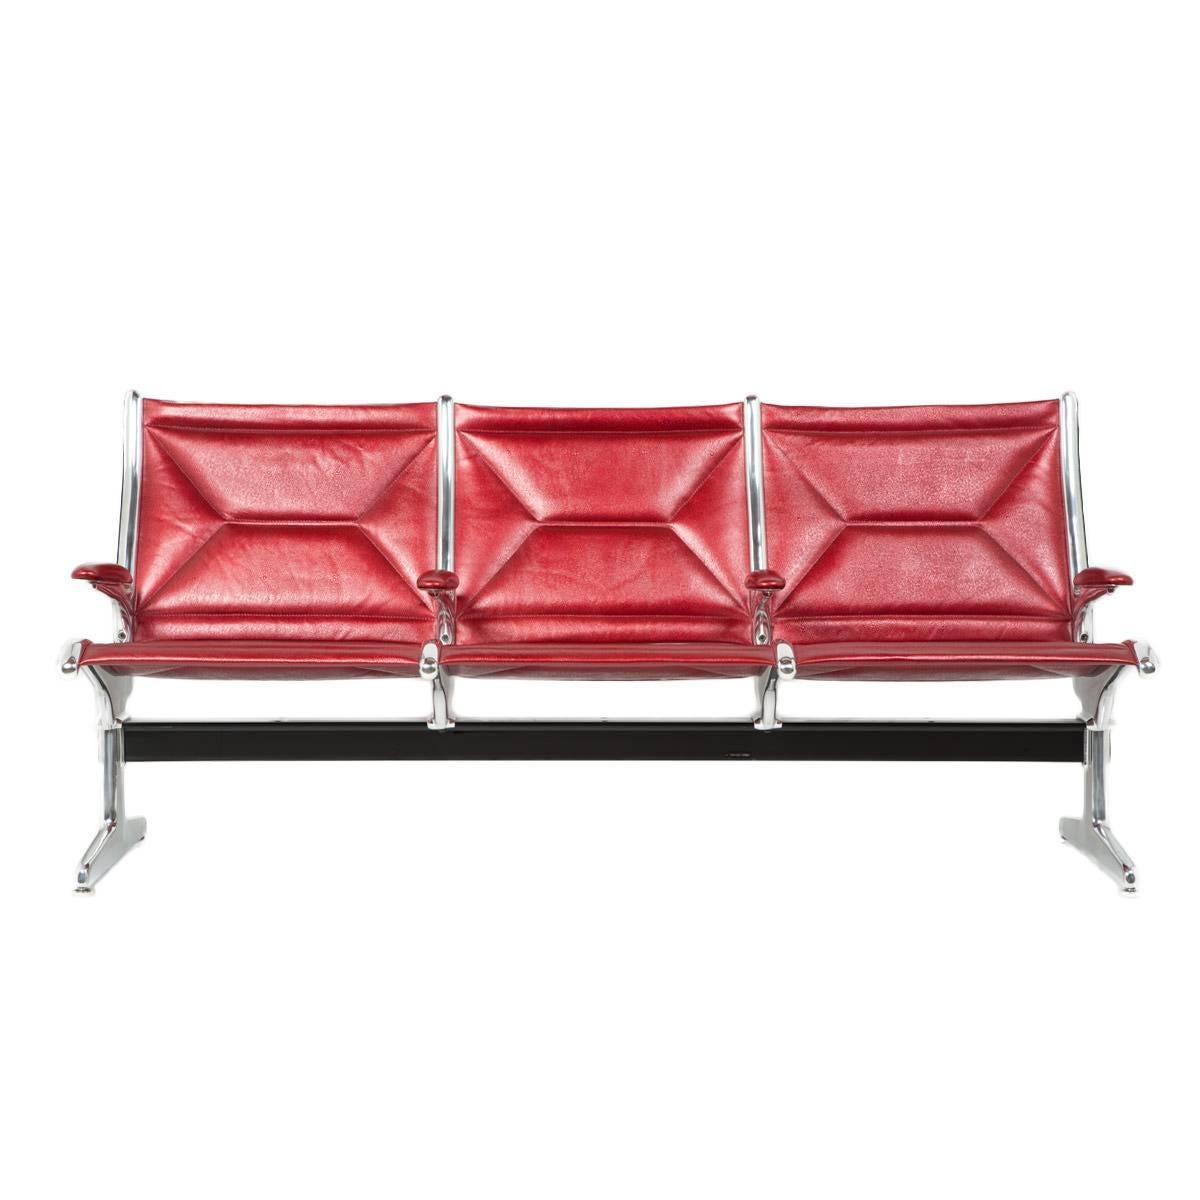 Eames for Herman Miller Tandem Sling Bench in Red Edelman Leather